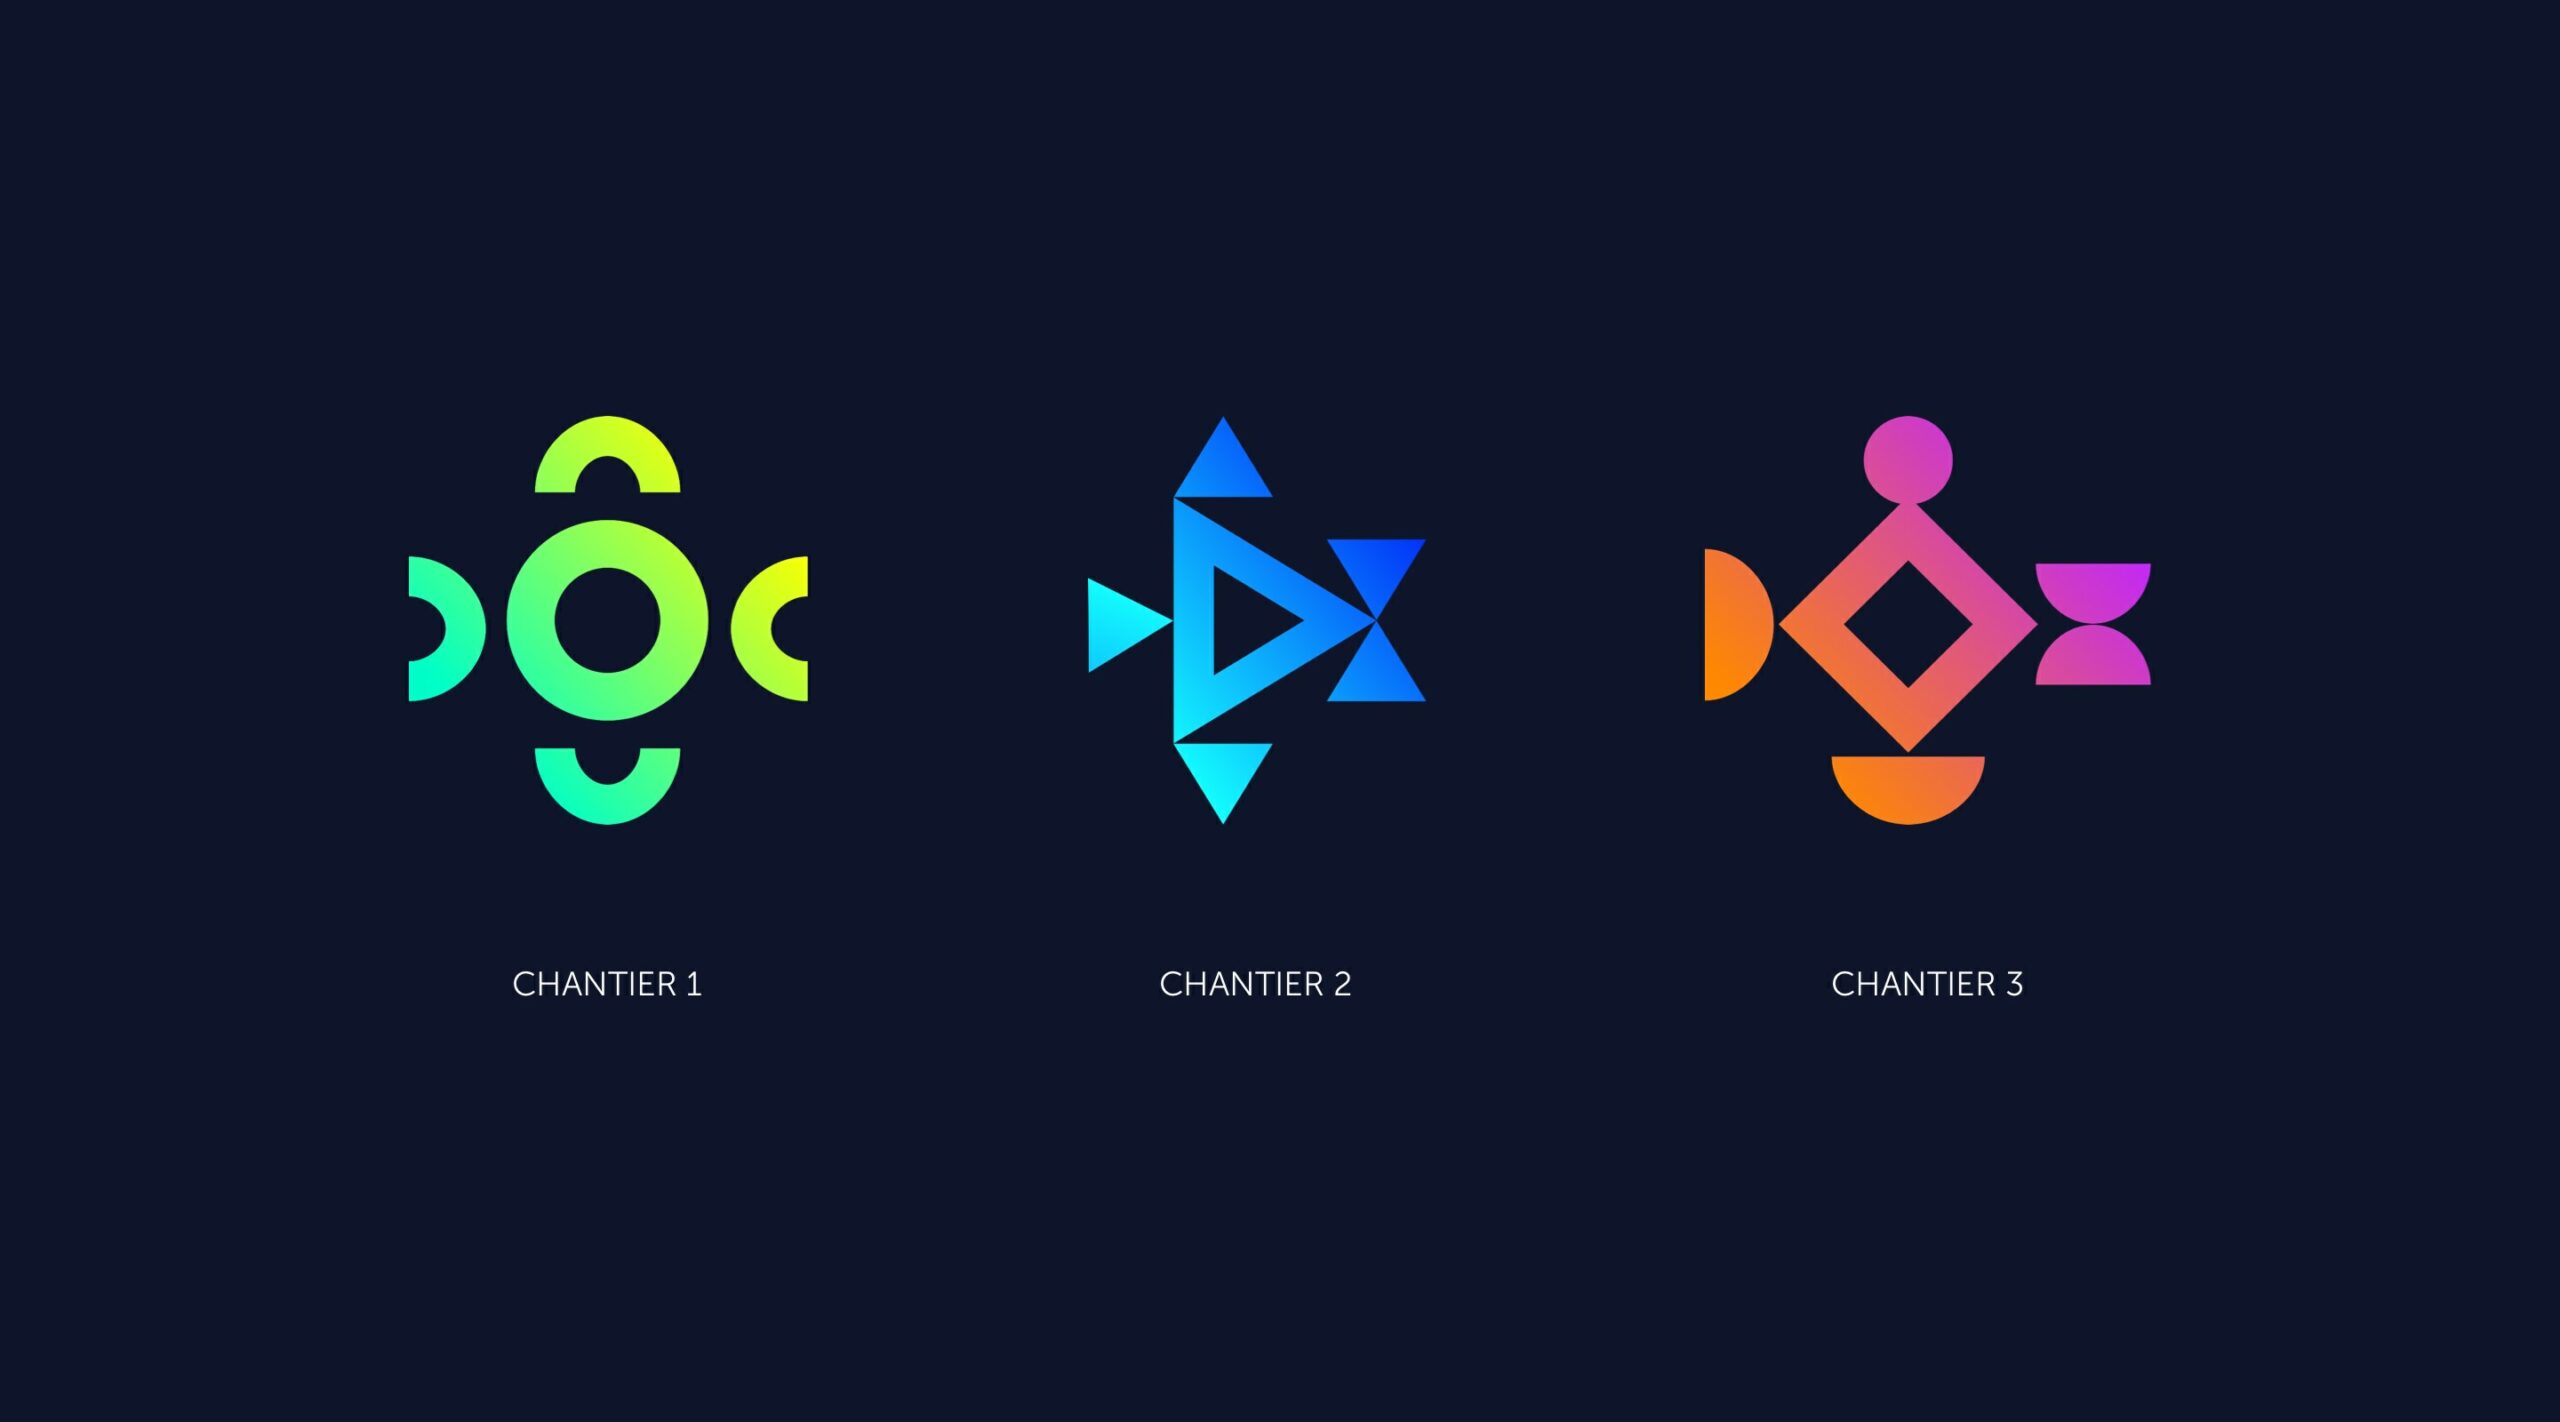 emblems of 3 CSC projects representing a combination of symbols